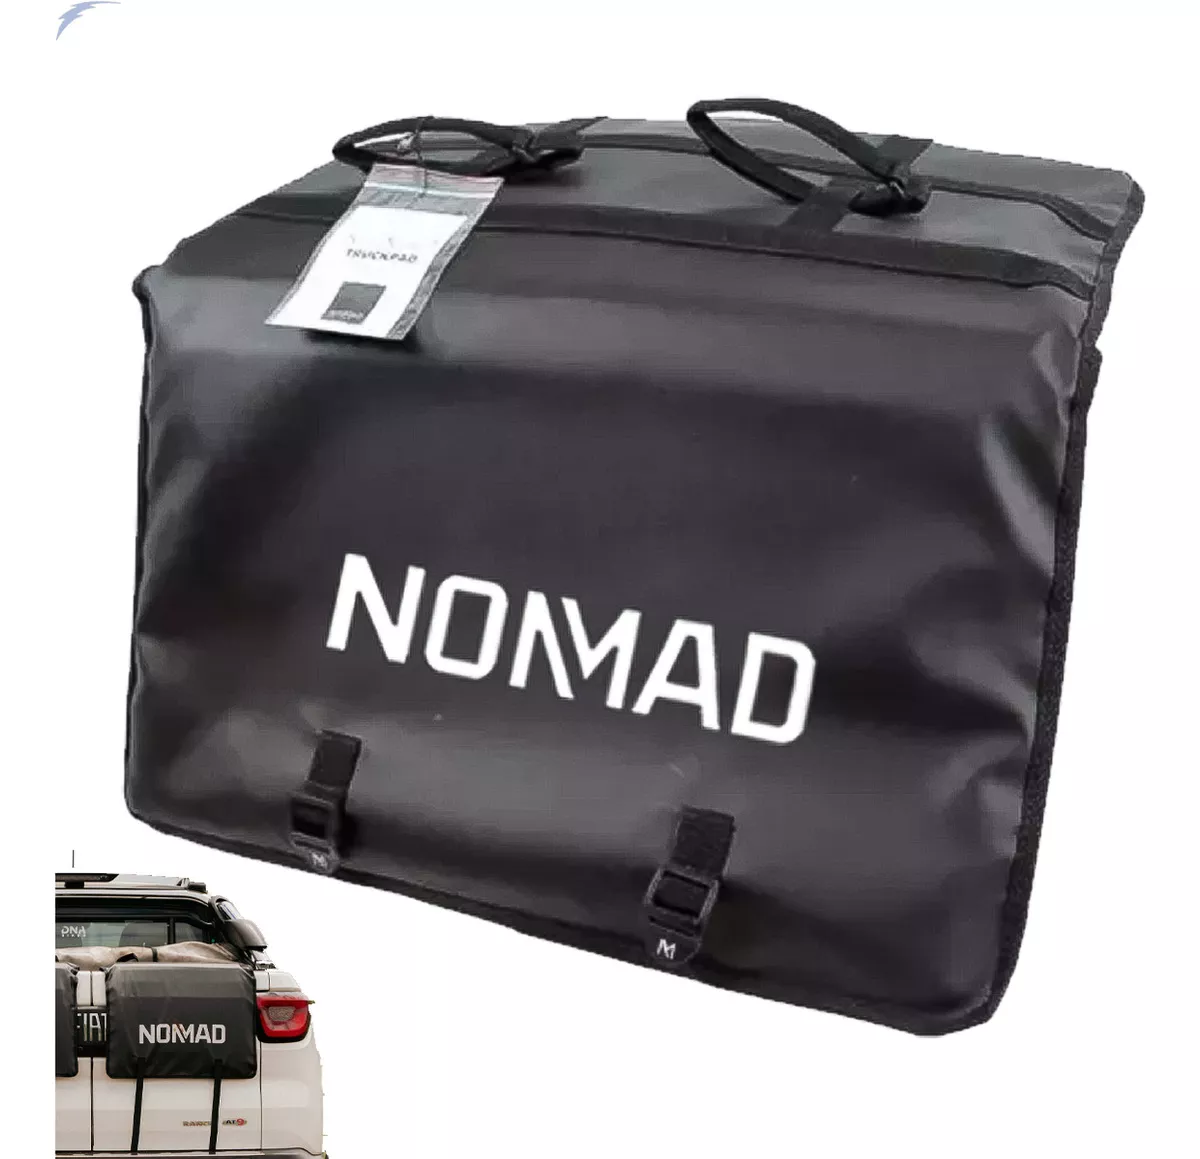 Primeira imagem para pesquisa de truck pad nomad